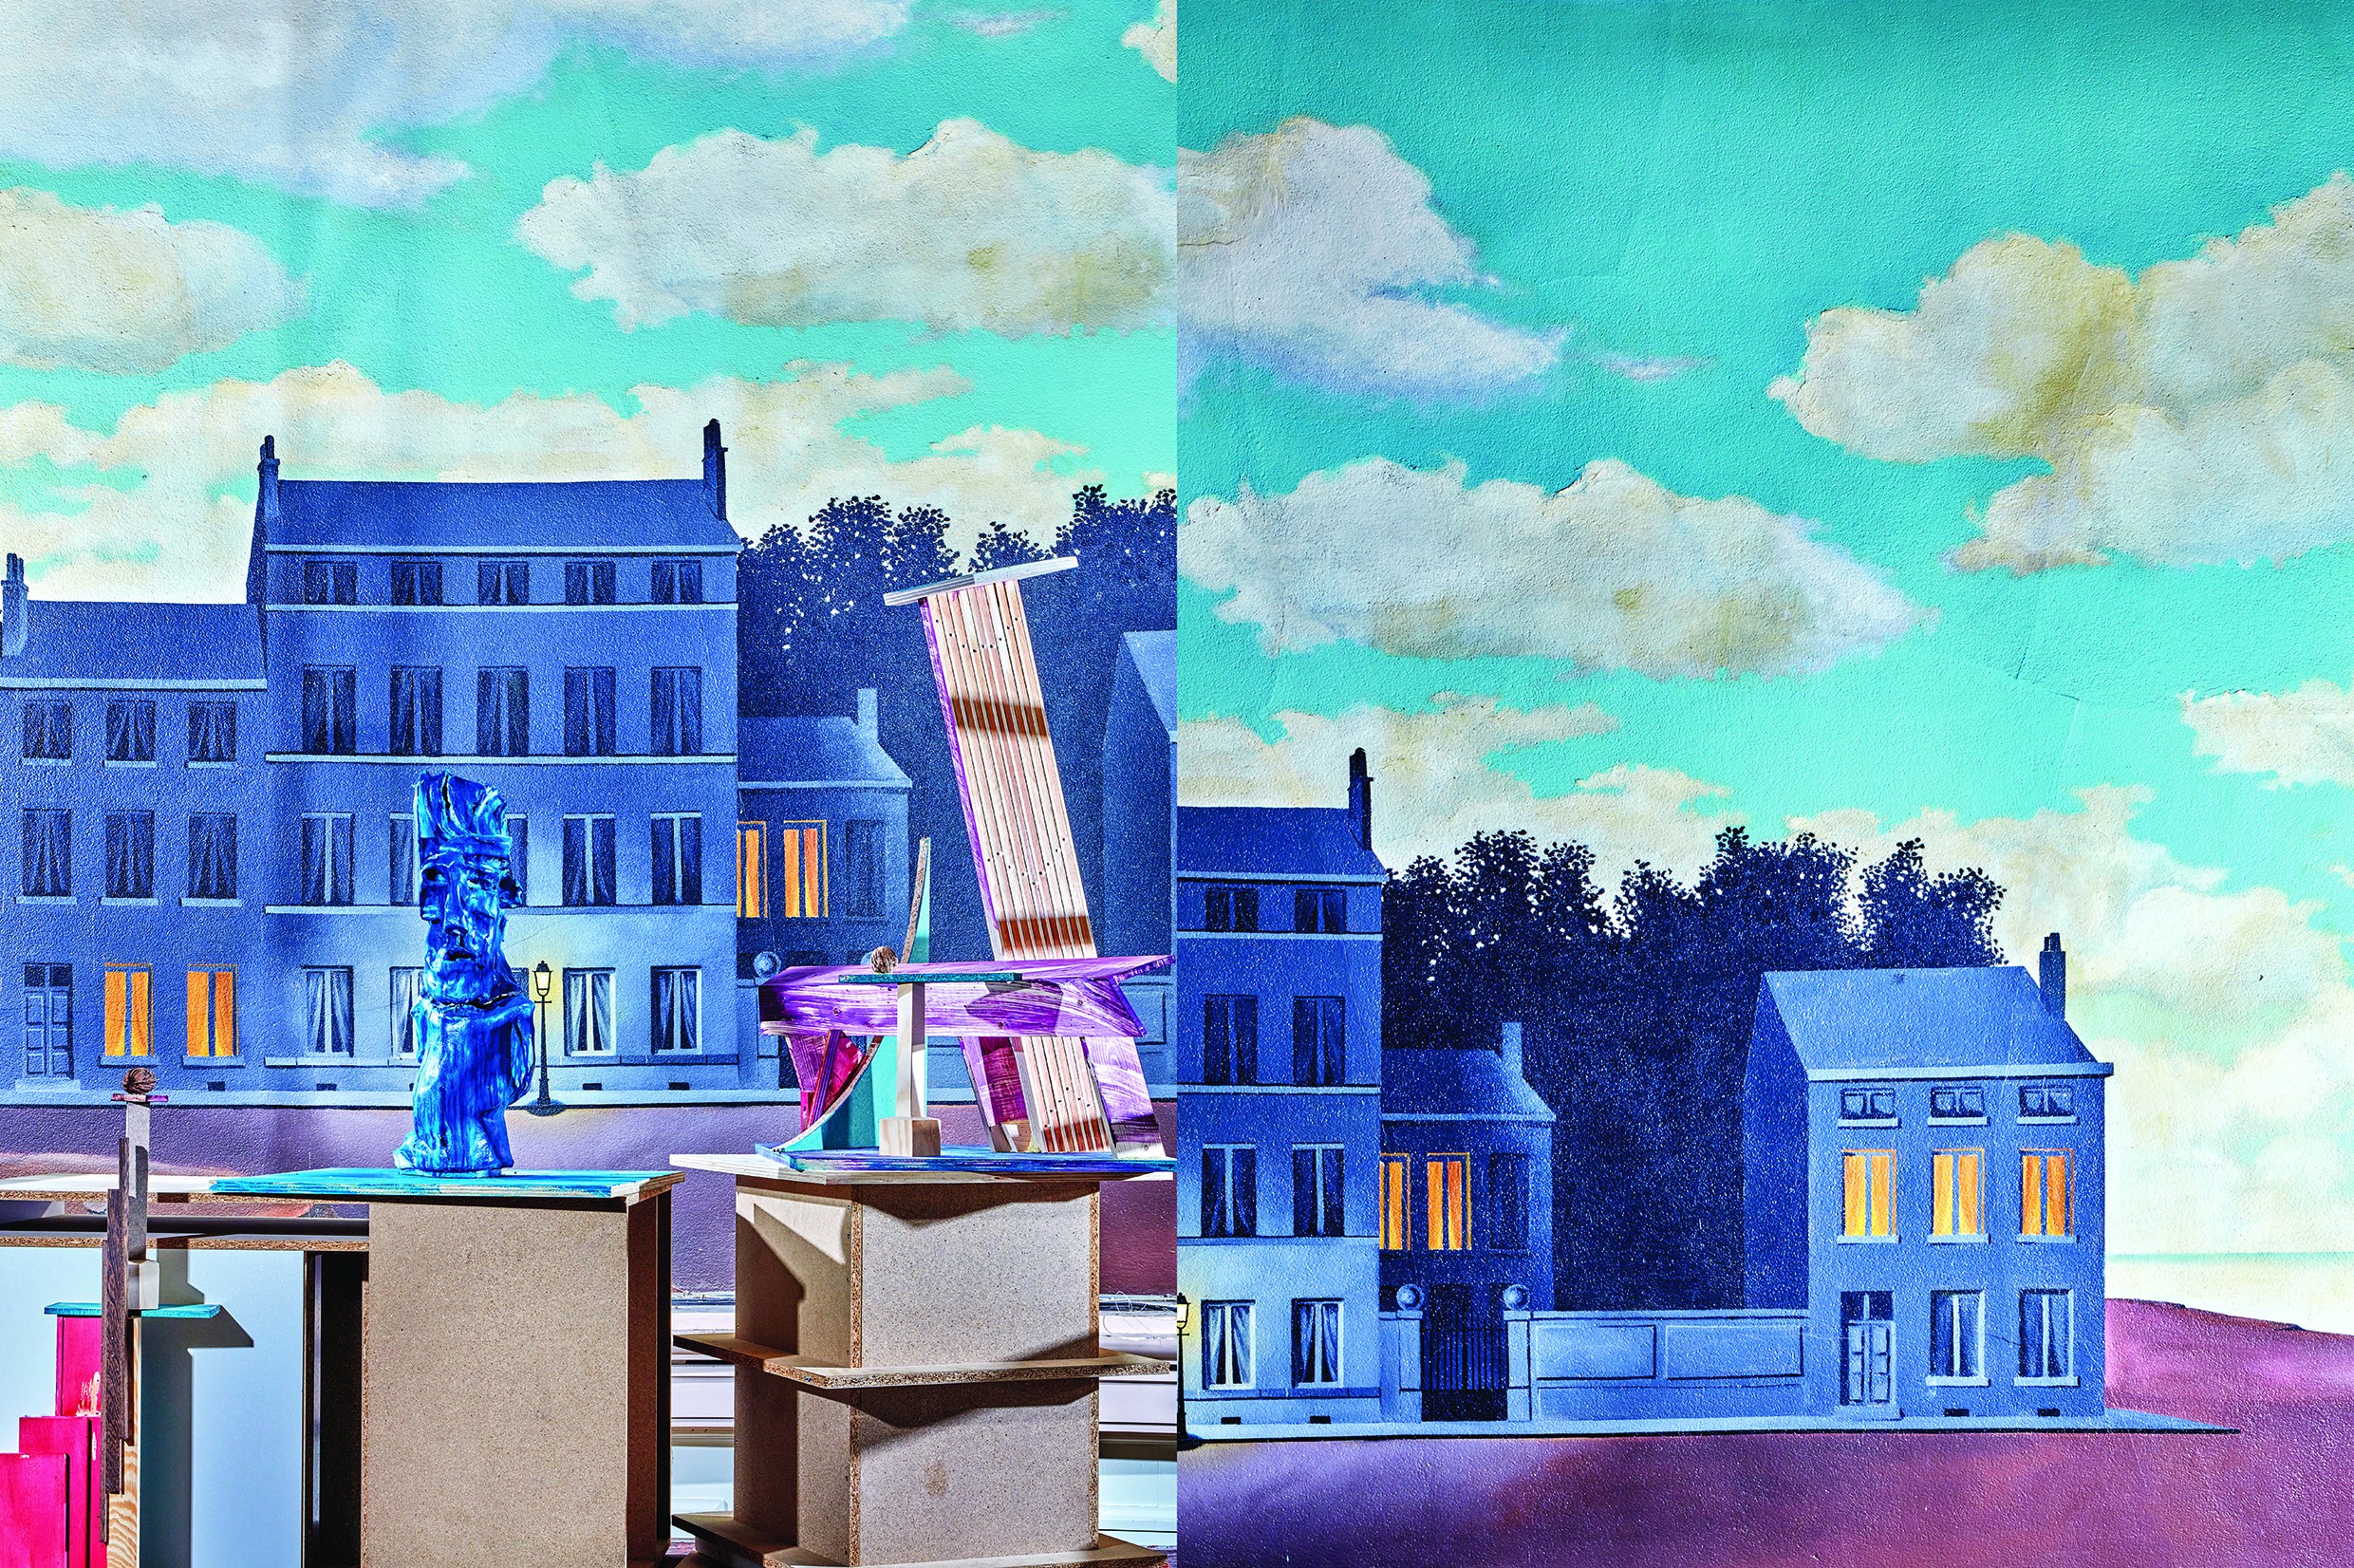 Jan Frederik De Cock (1976, Brussels), 'The New Enchanted Domain, XIII', 2021, 60 x 91 cm